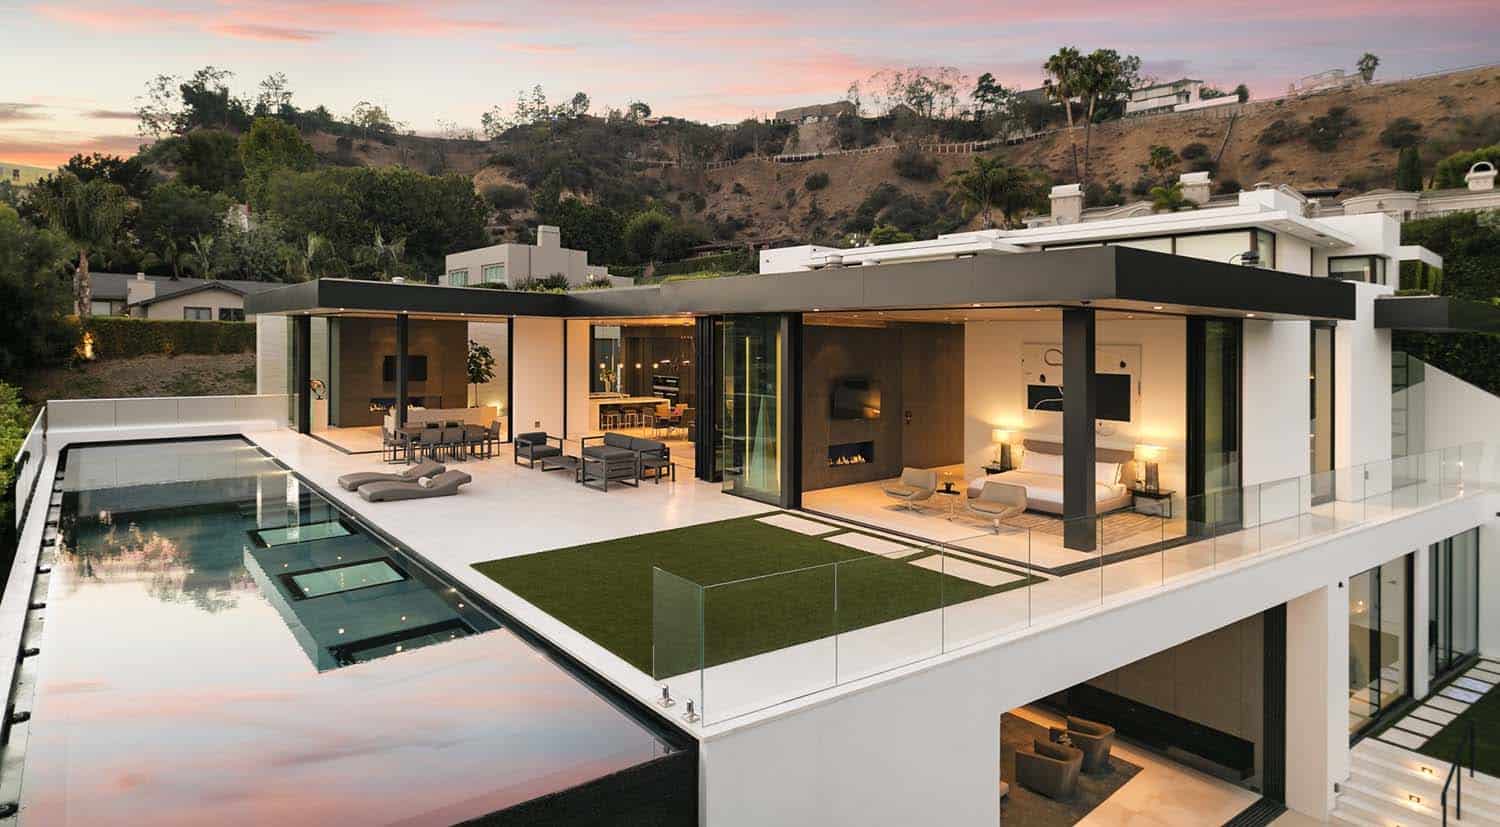 Sleek and sexy modern hillside home above Sunset Plaza, LA